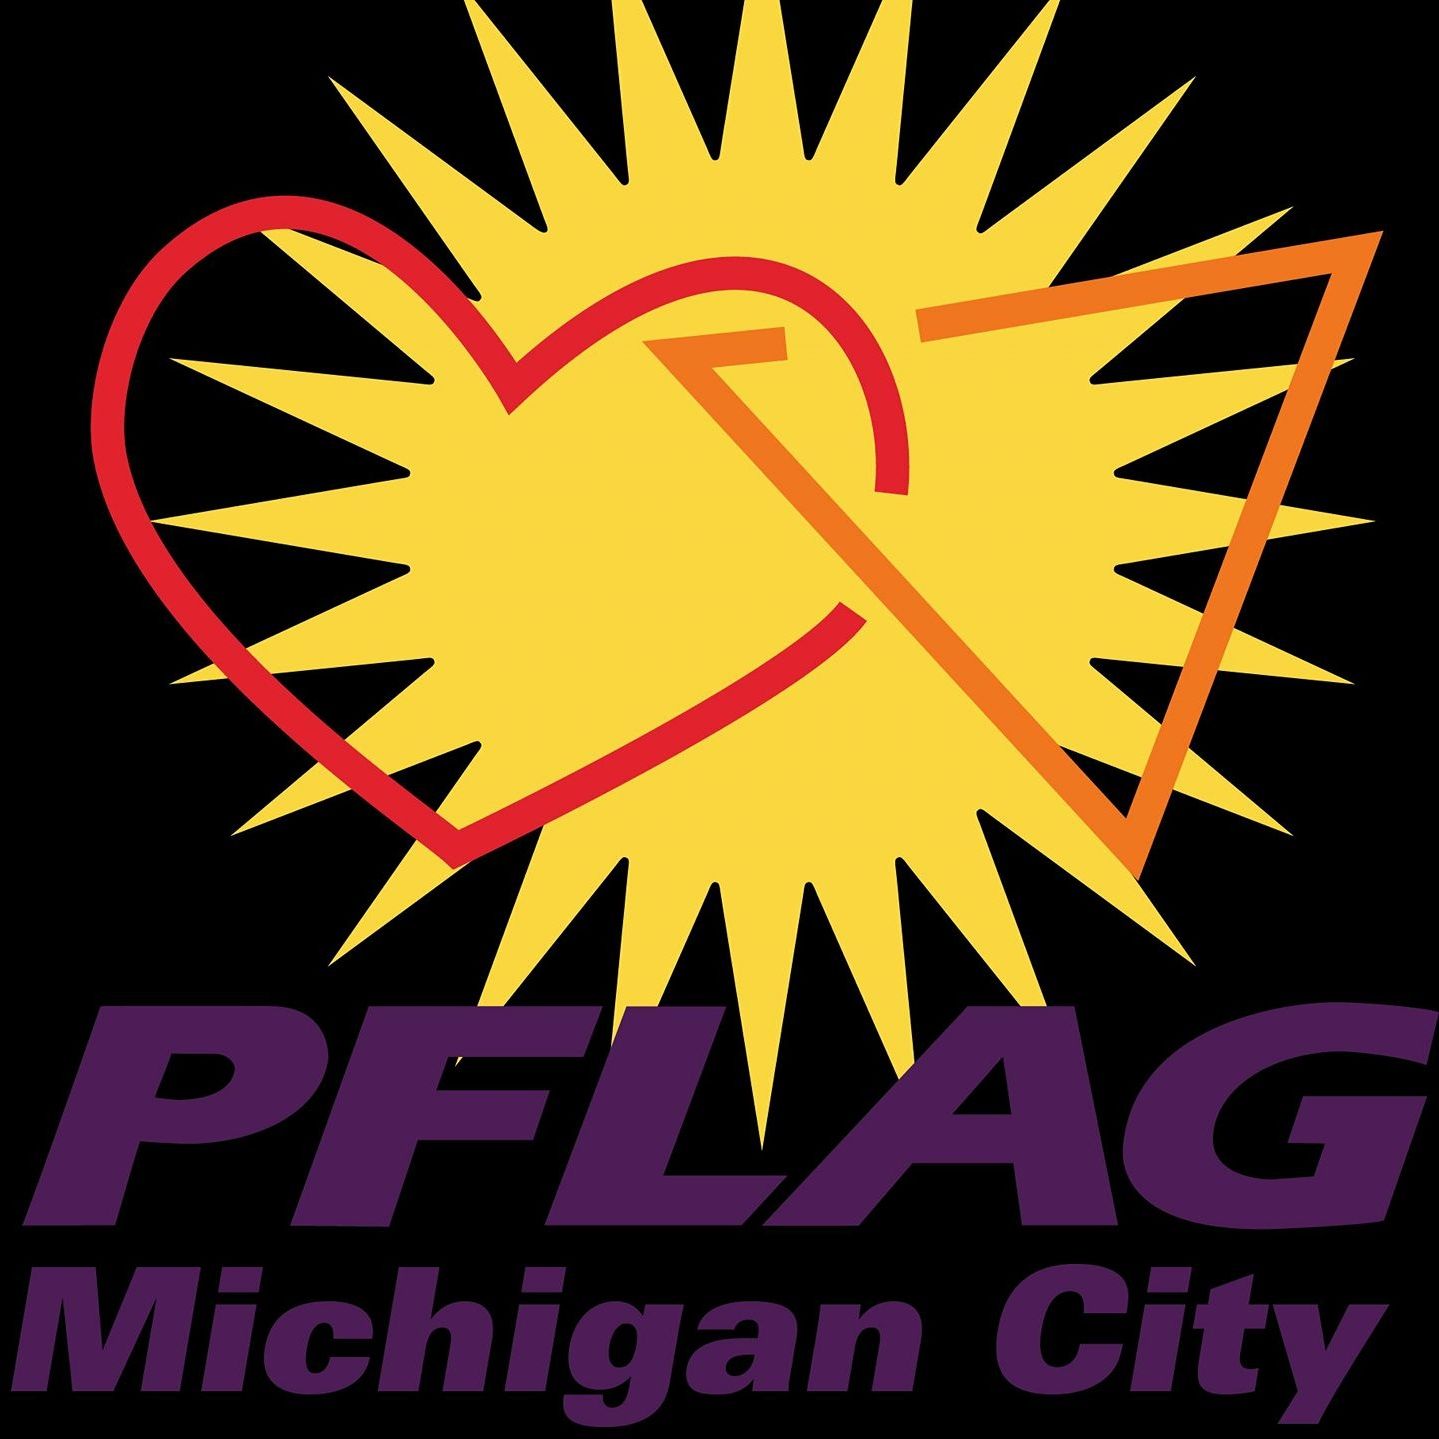 LGBTQ Organizations in Indiana - PFLAG Michigan City